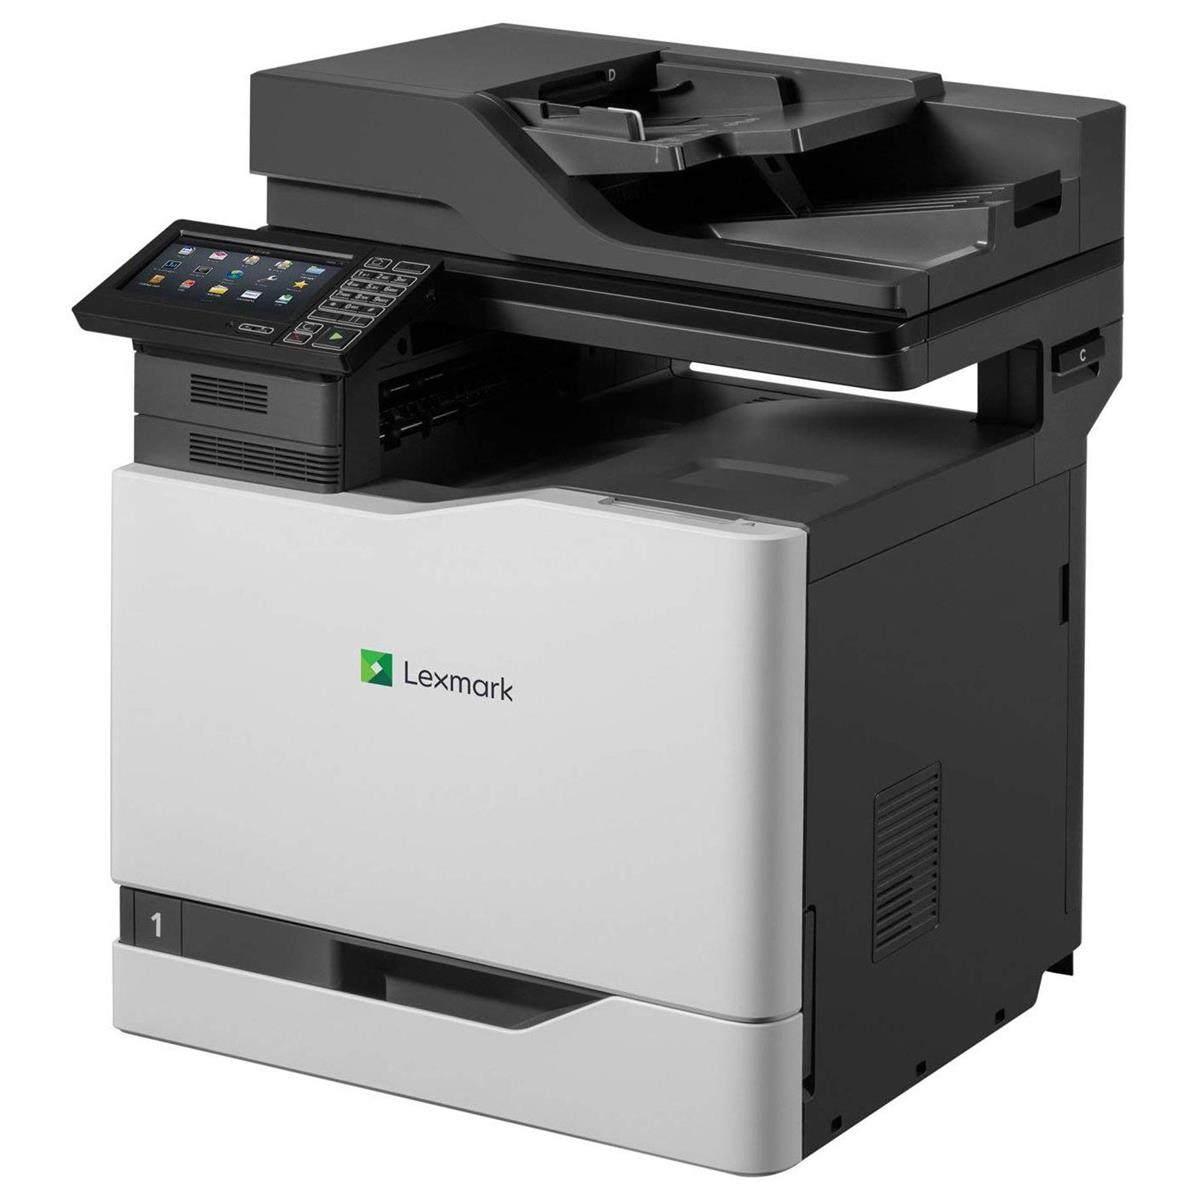 Image of Lexmark CX820de Color Laser Multifunction Printer